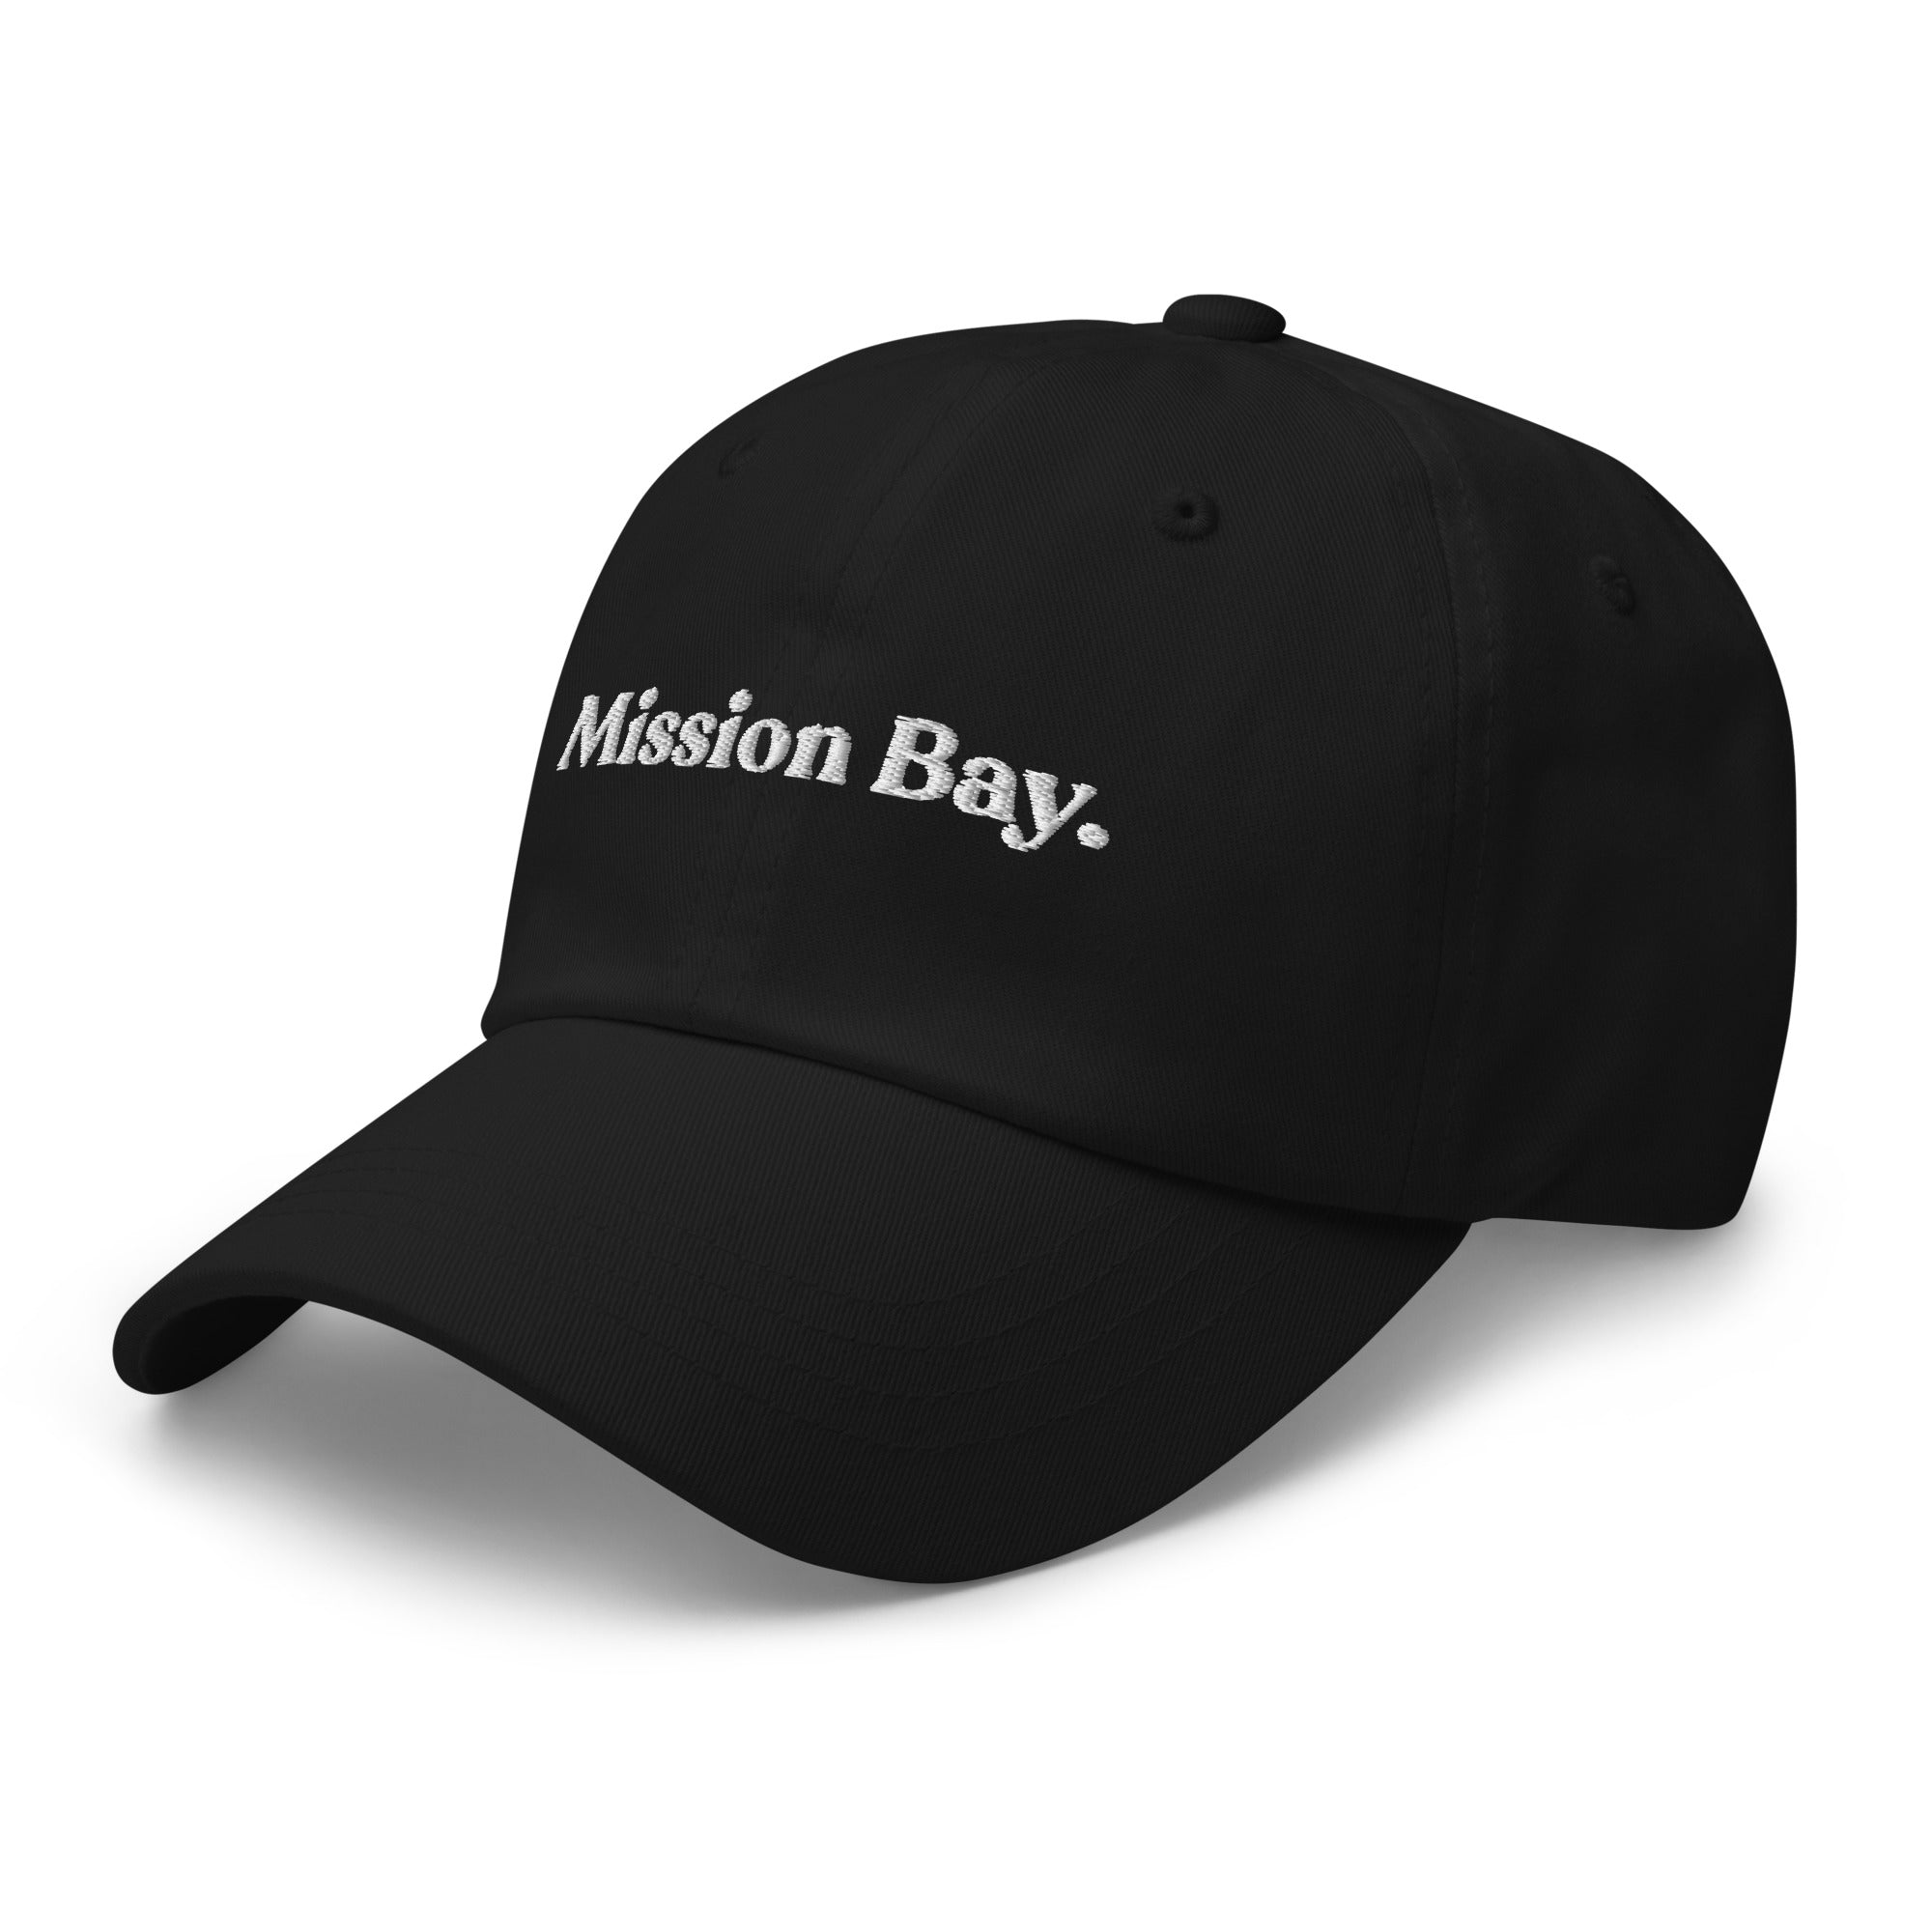 Classic Dad Hat - Mission Bay | San Francisco, CA